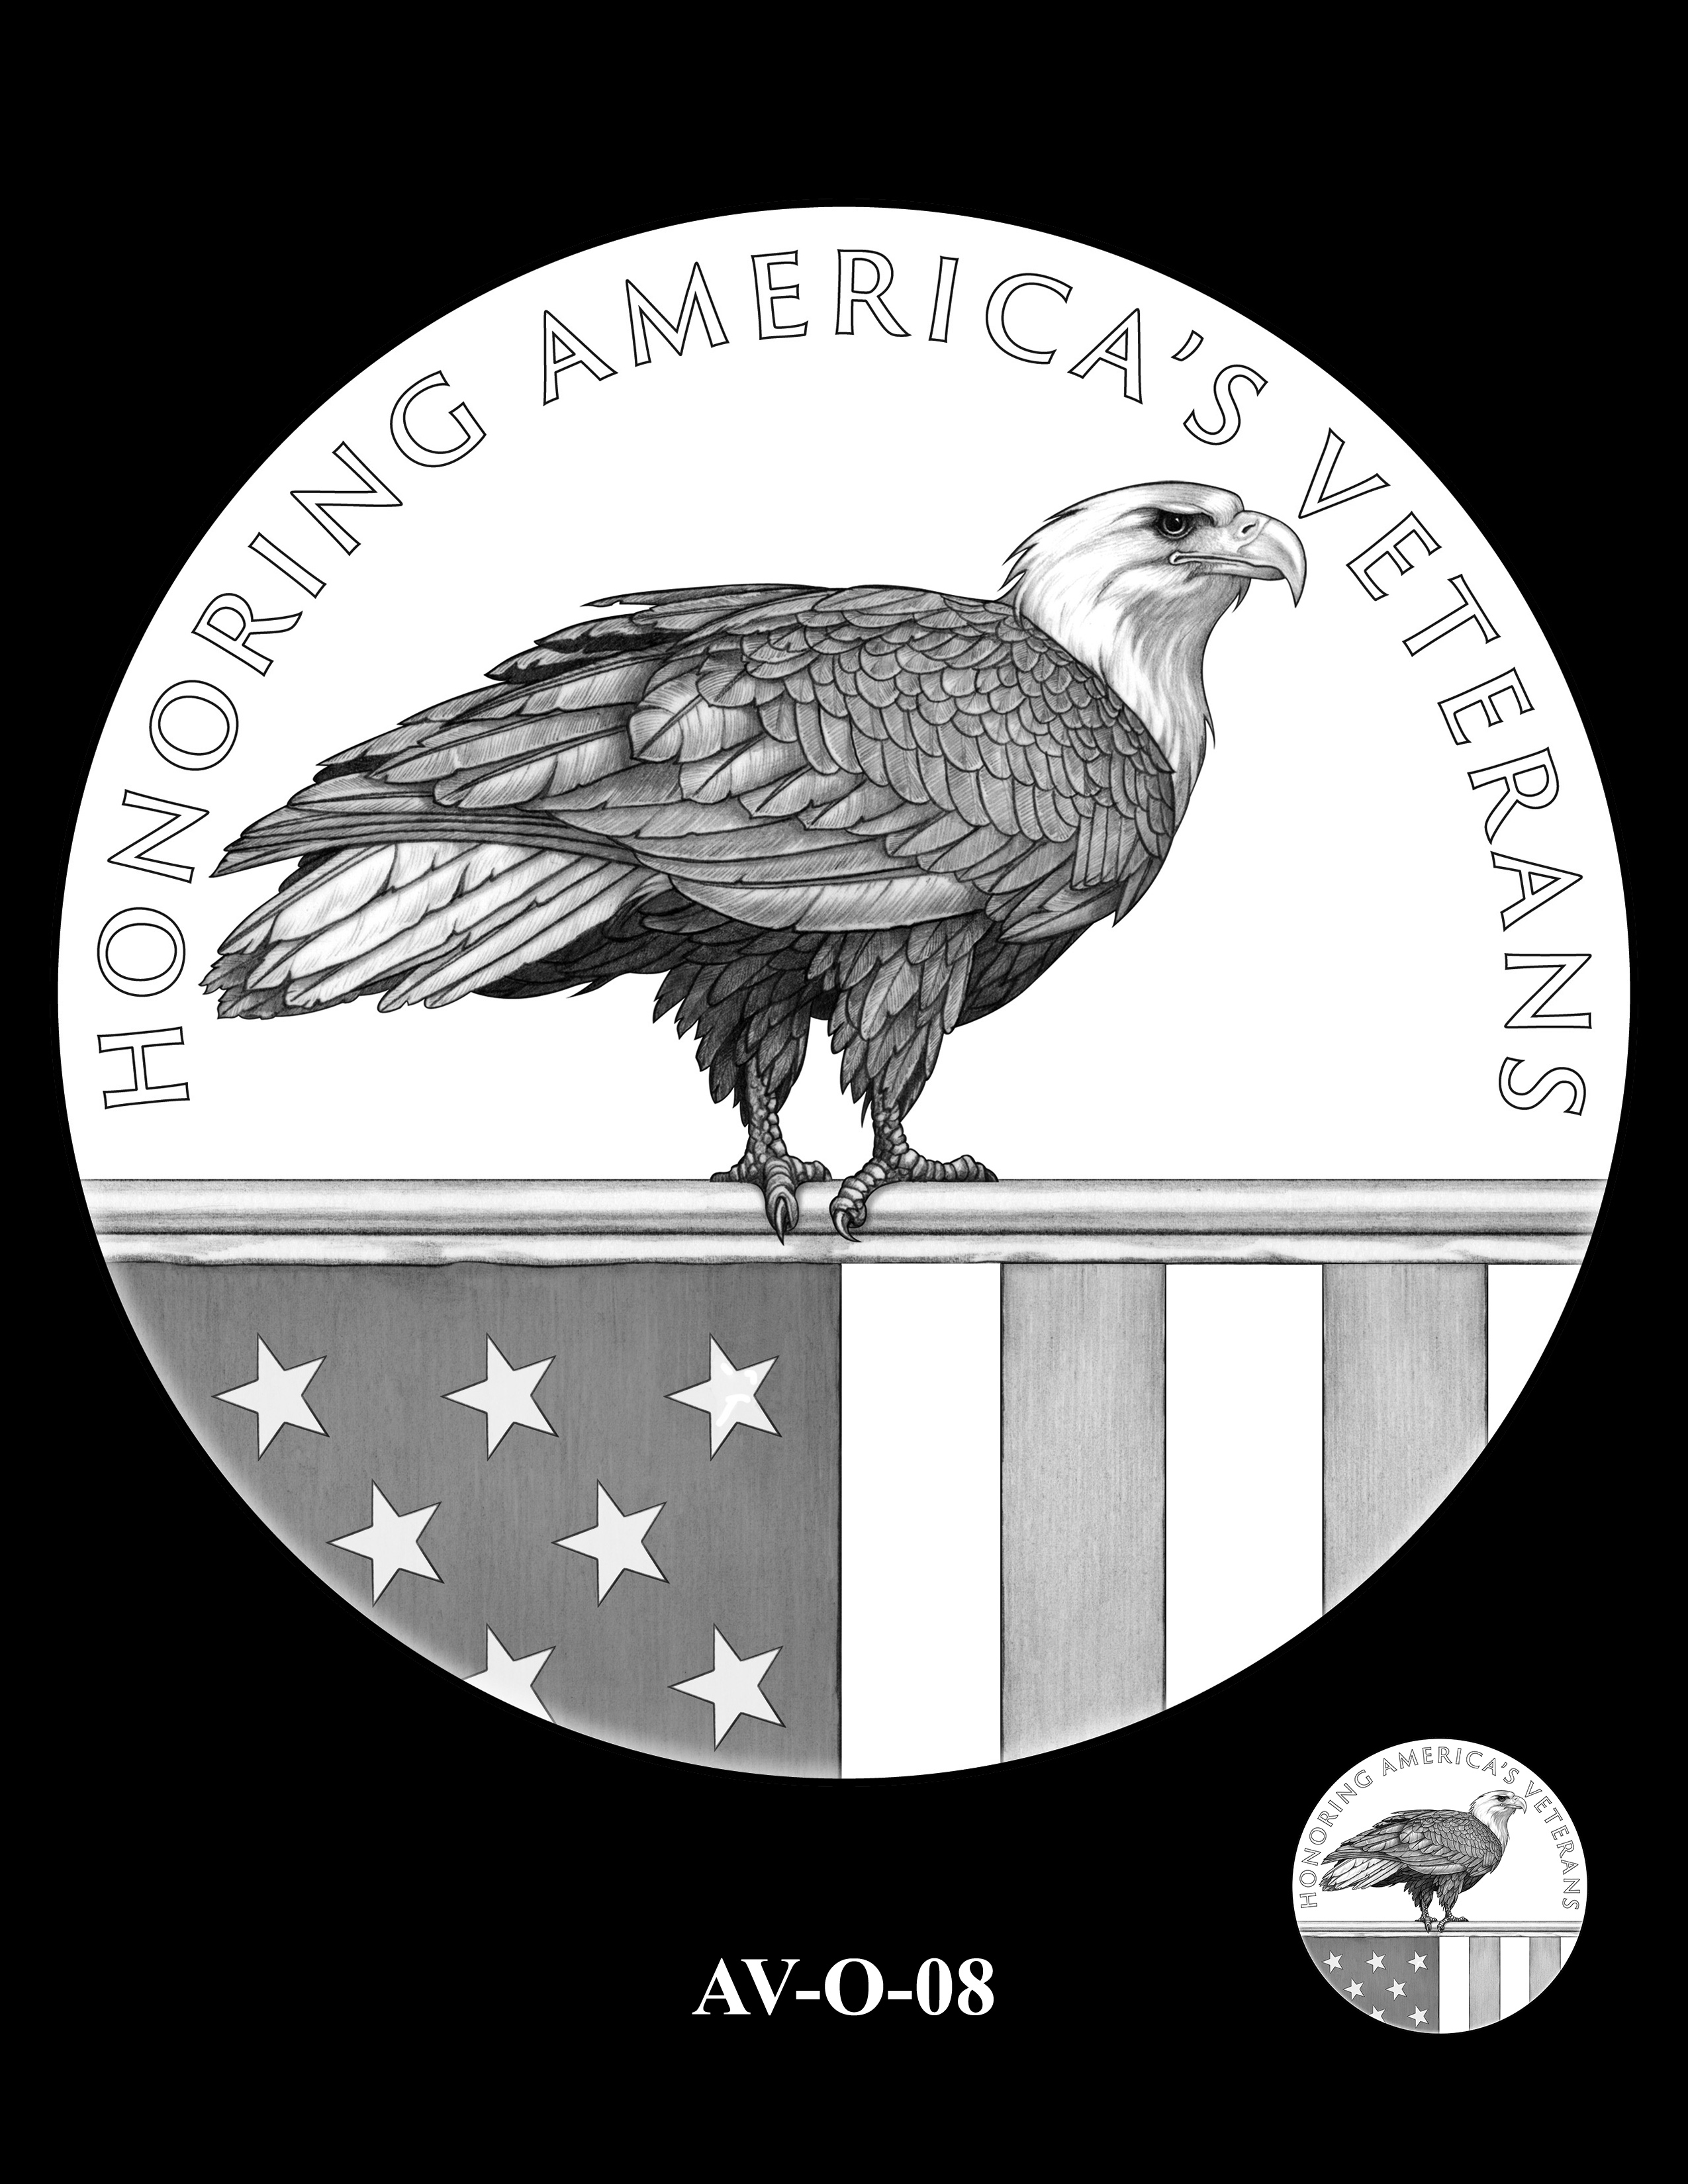 AV-O-08 - American Veterans Medal